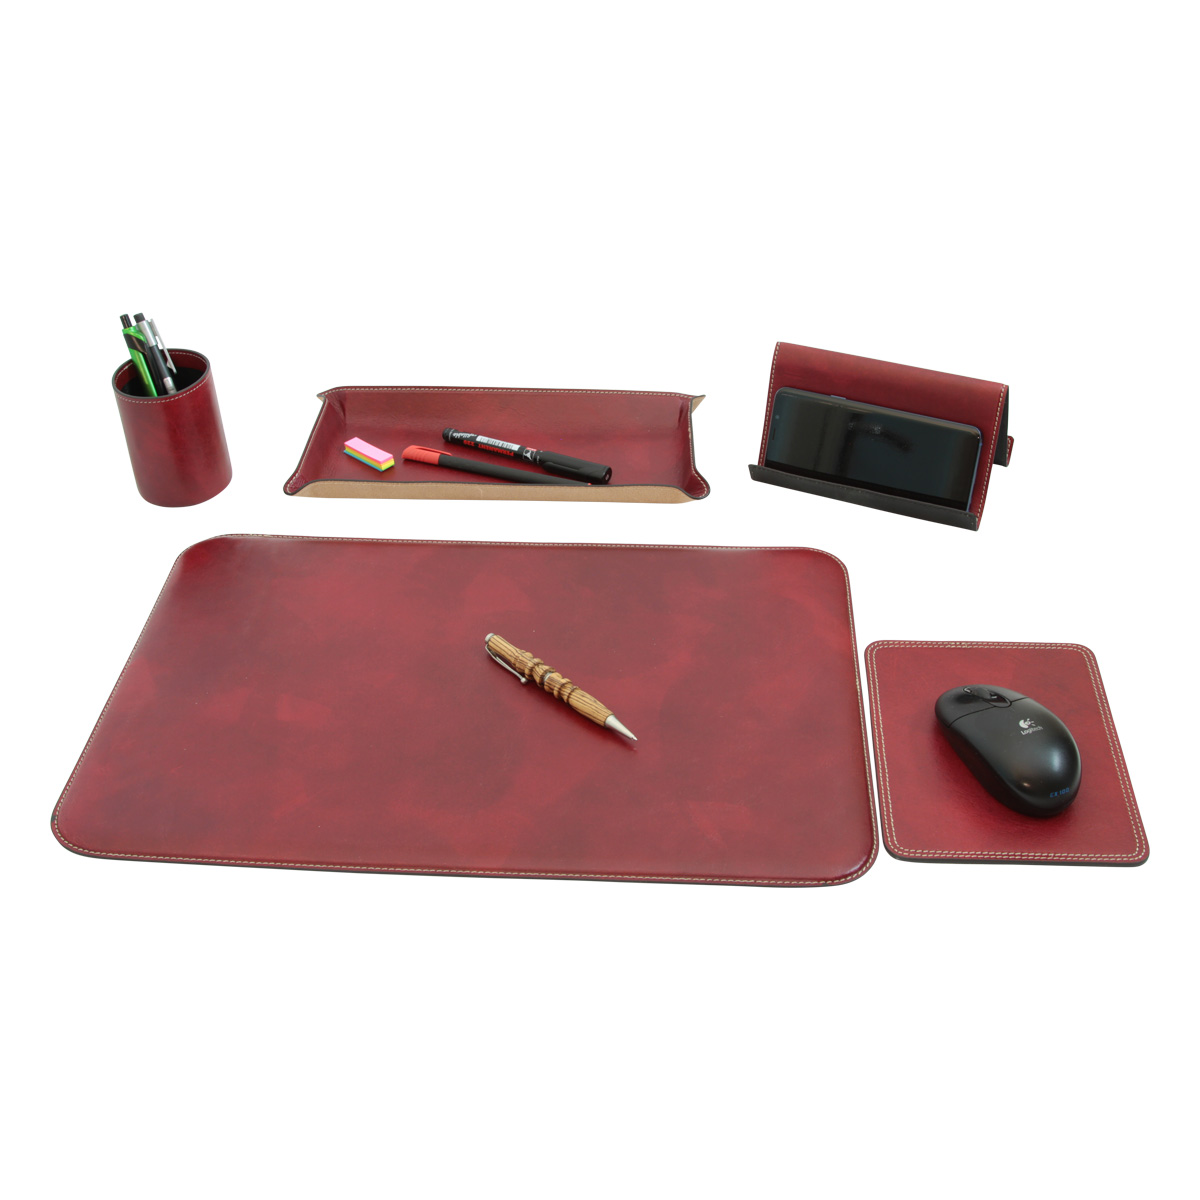 Leather desk kit - 5 pcs  red | 769089RO | EURO | Old Angler Firenze